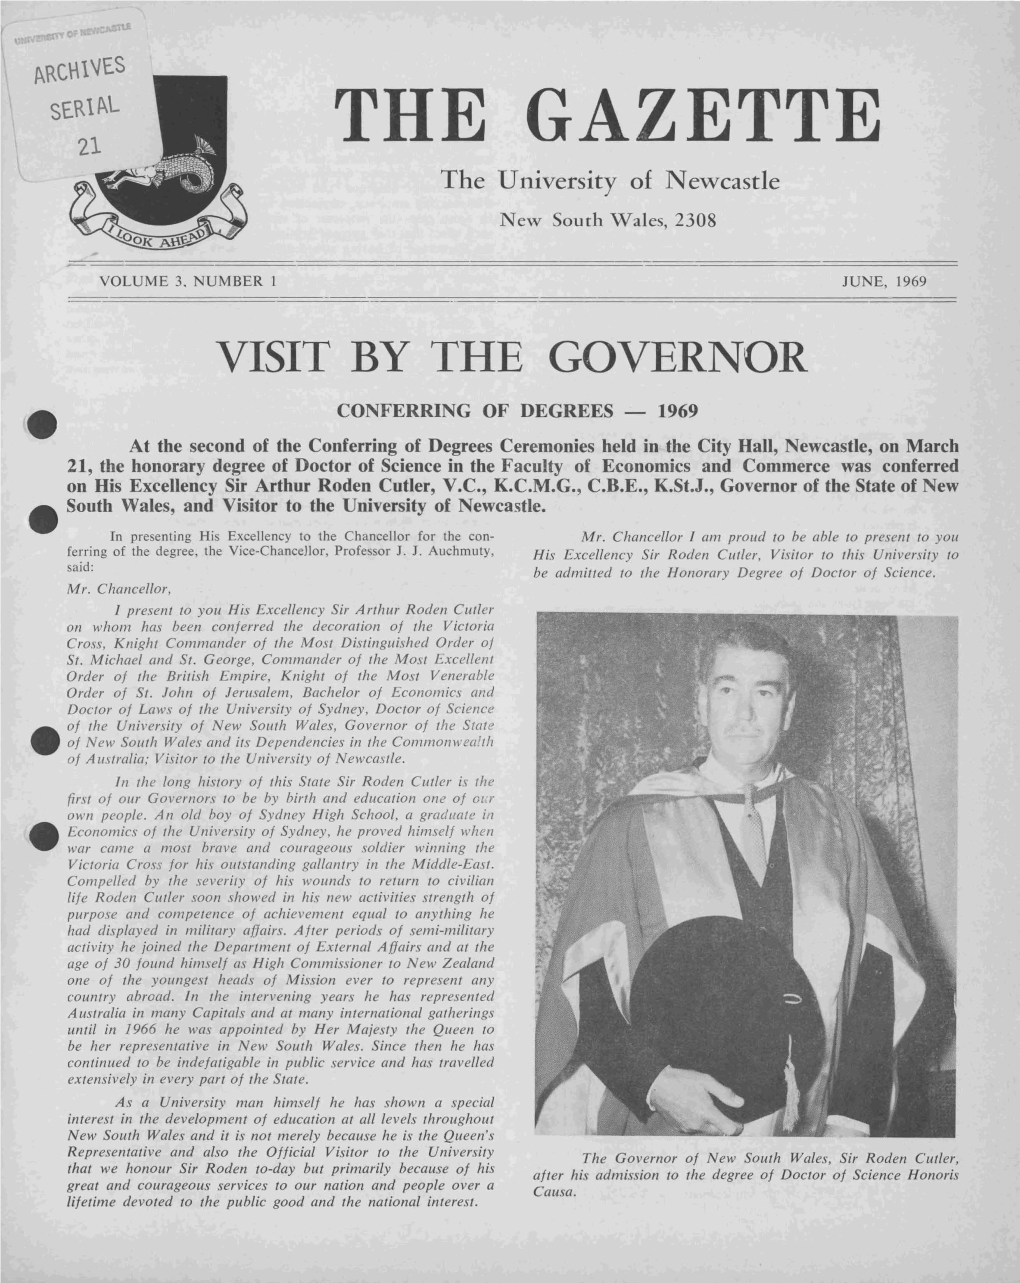 The Gazette, the University of Newcastle, Vol. 3, No. 1, June 1969